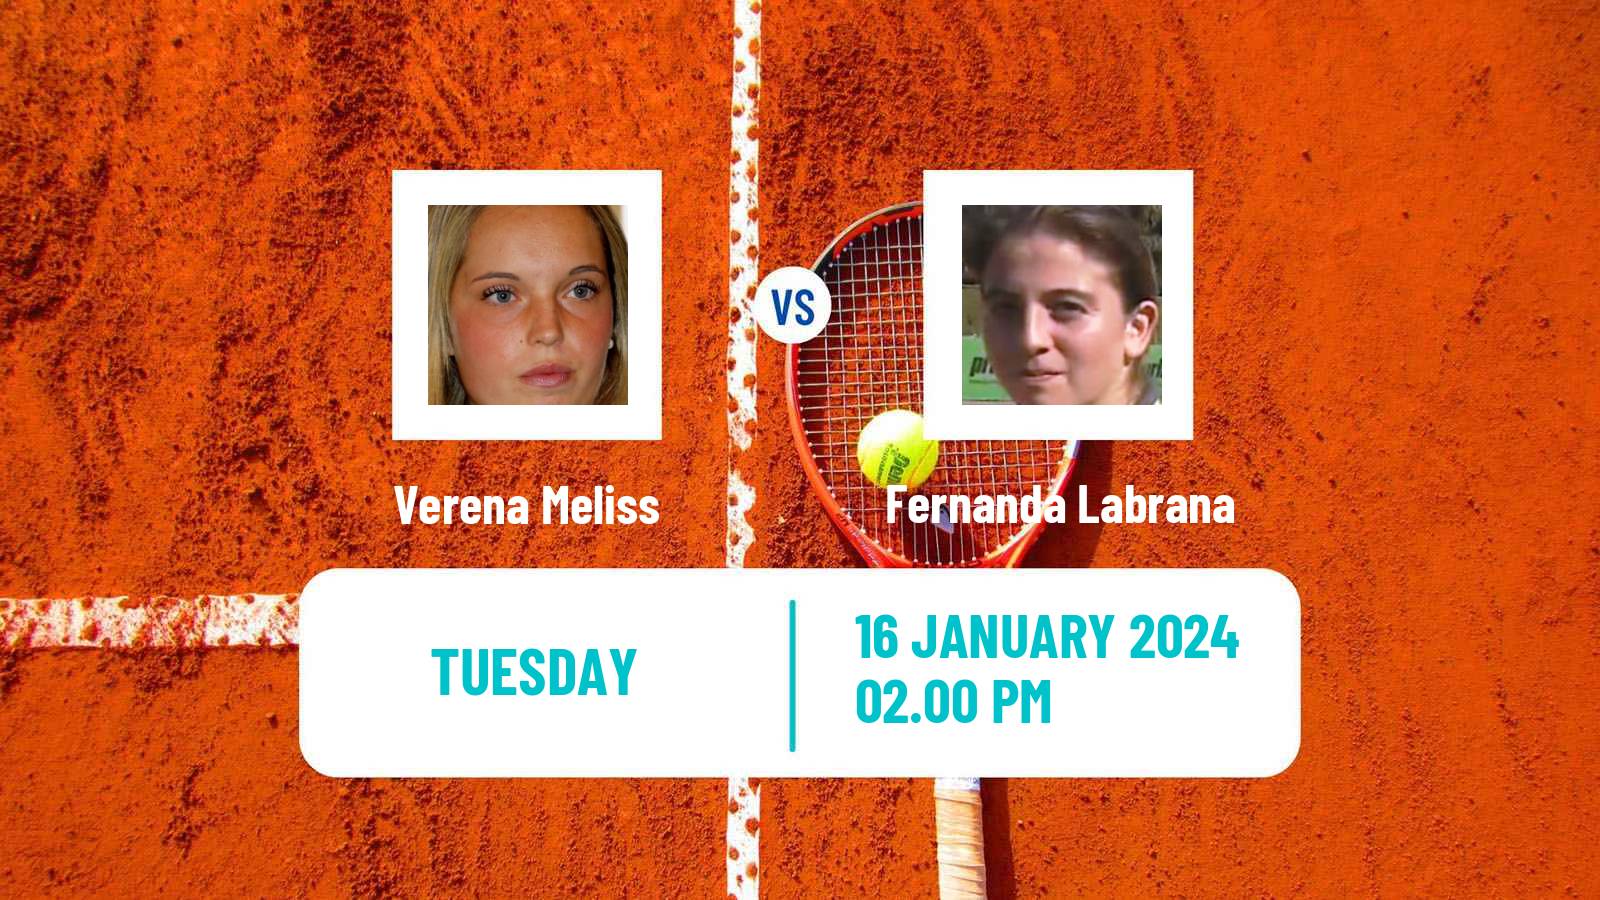 Tennis ITF W35 Buenos Aires Women Verena Meliss - Fernanda Labrana